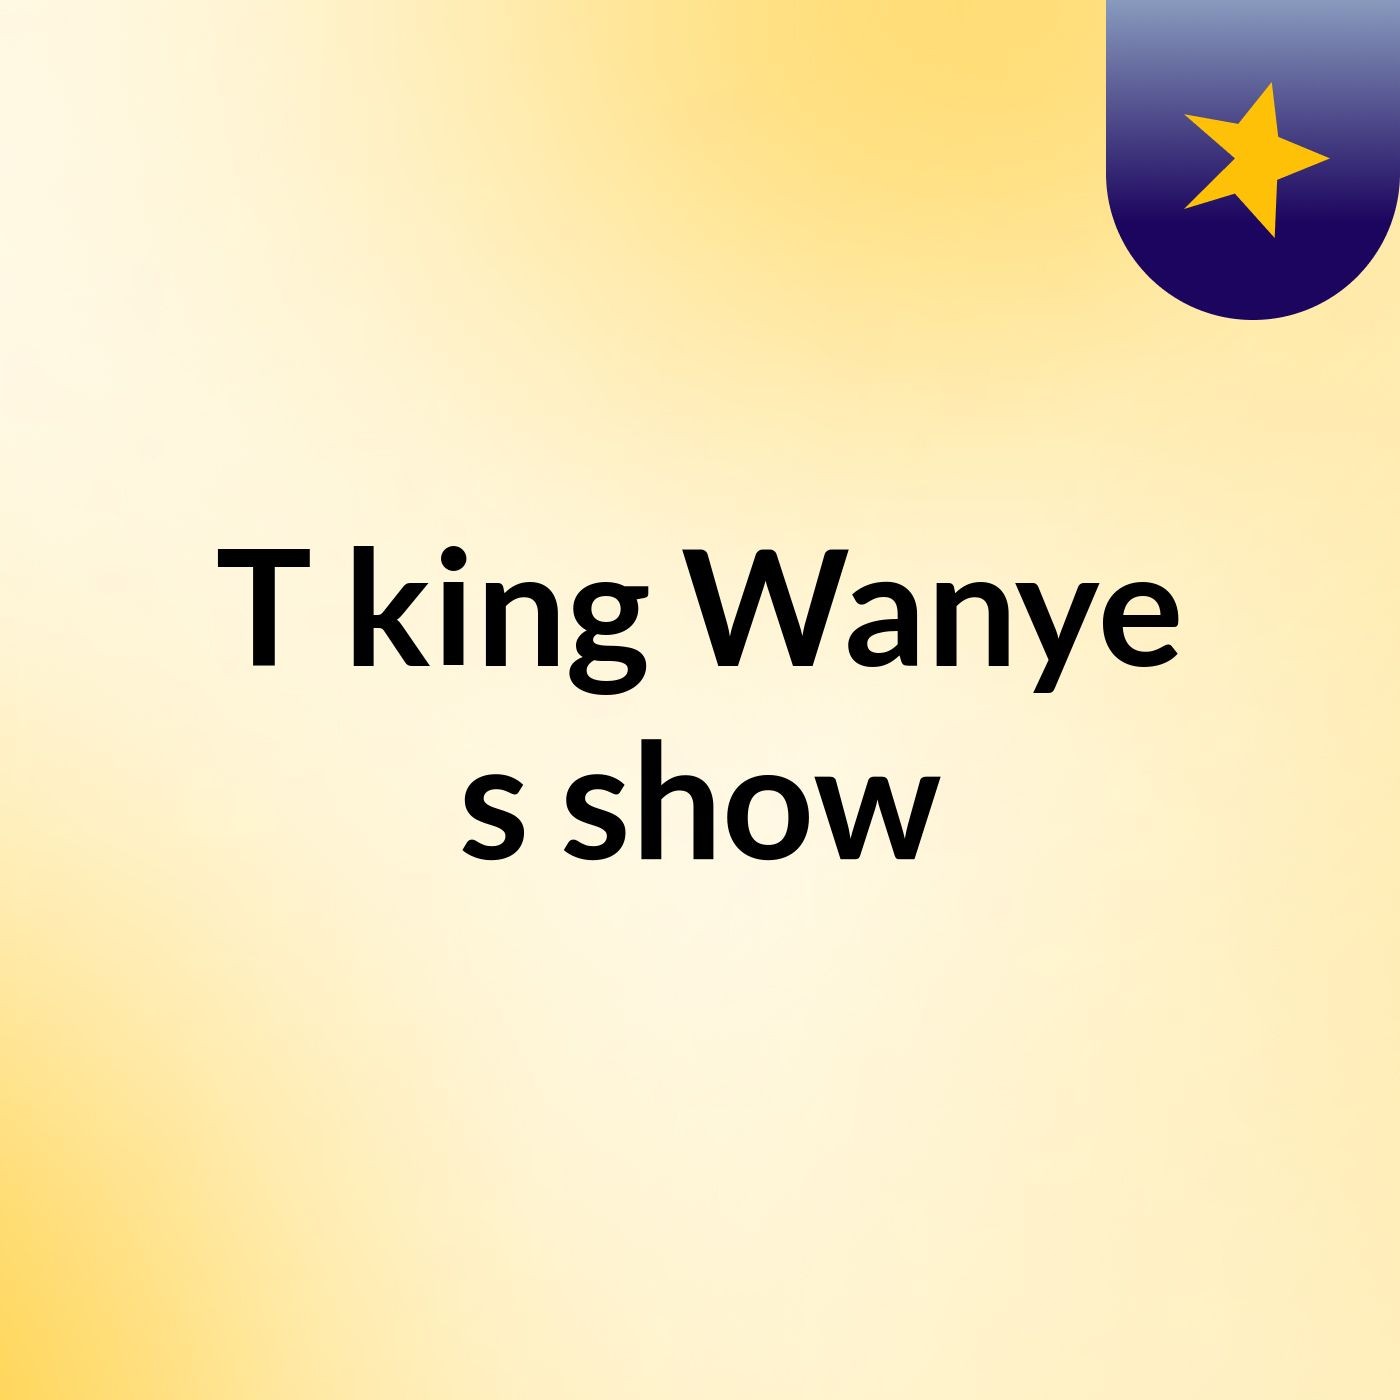 T king Wanye's show